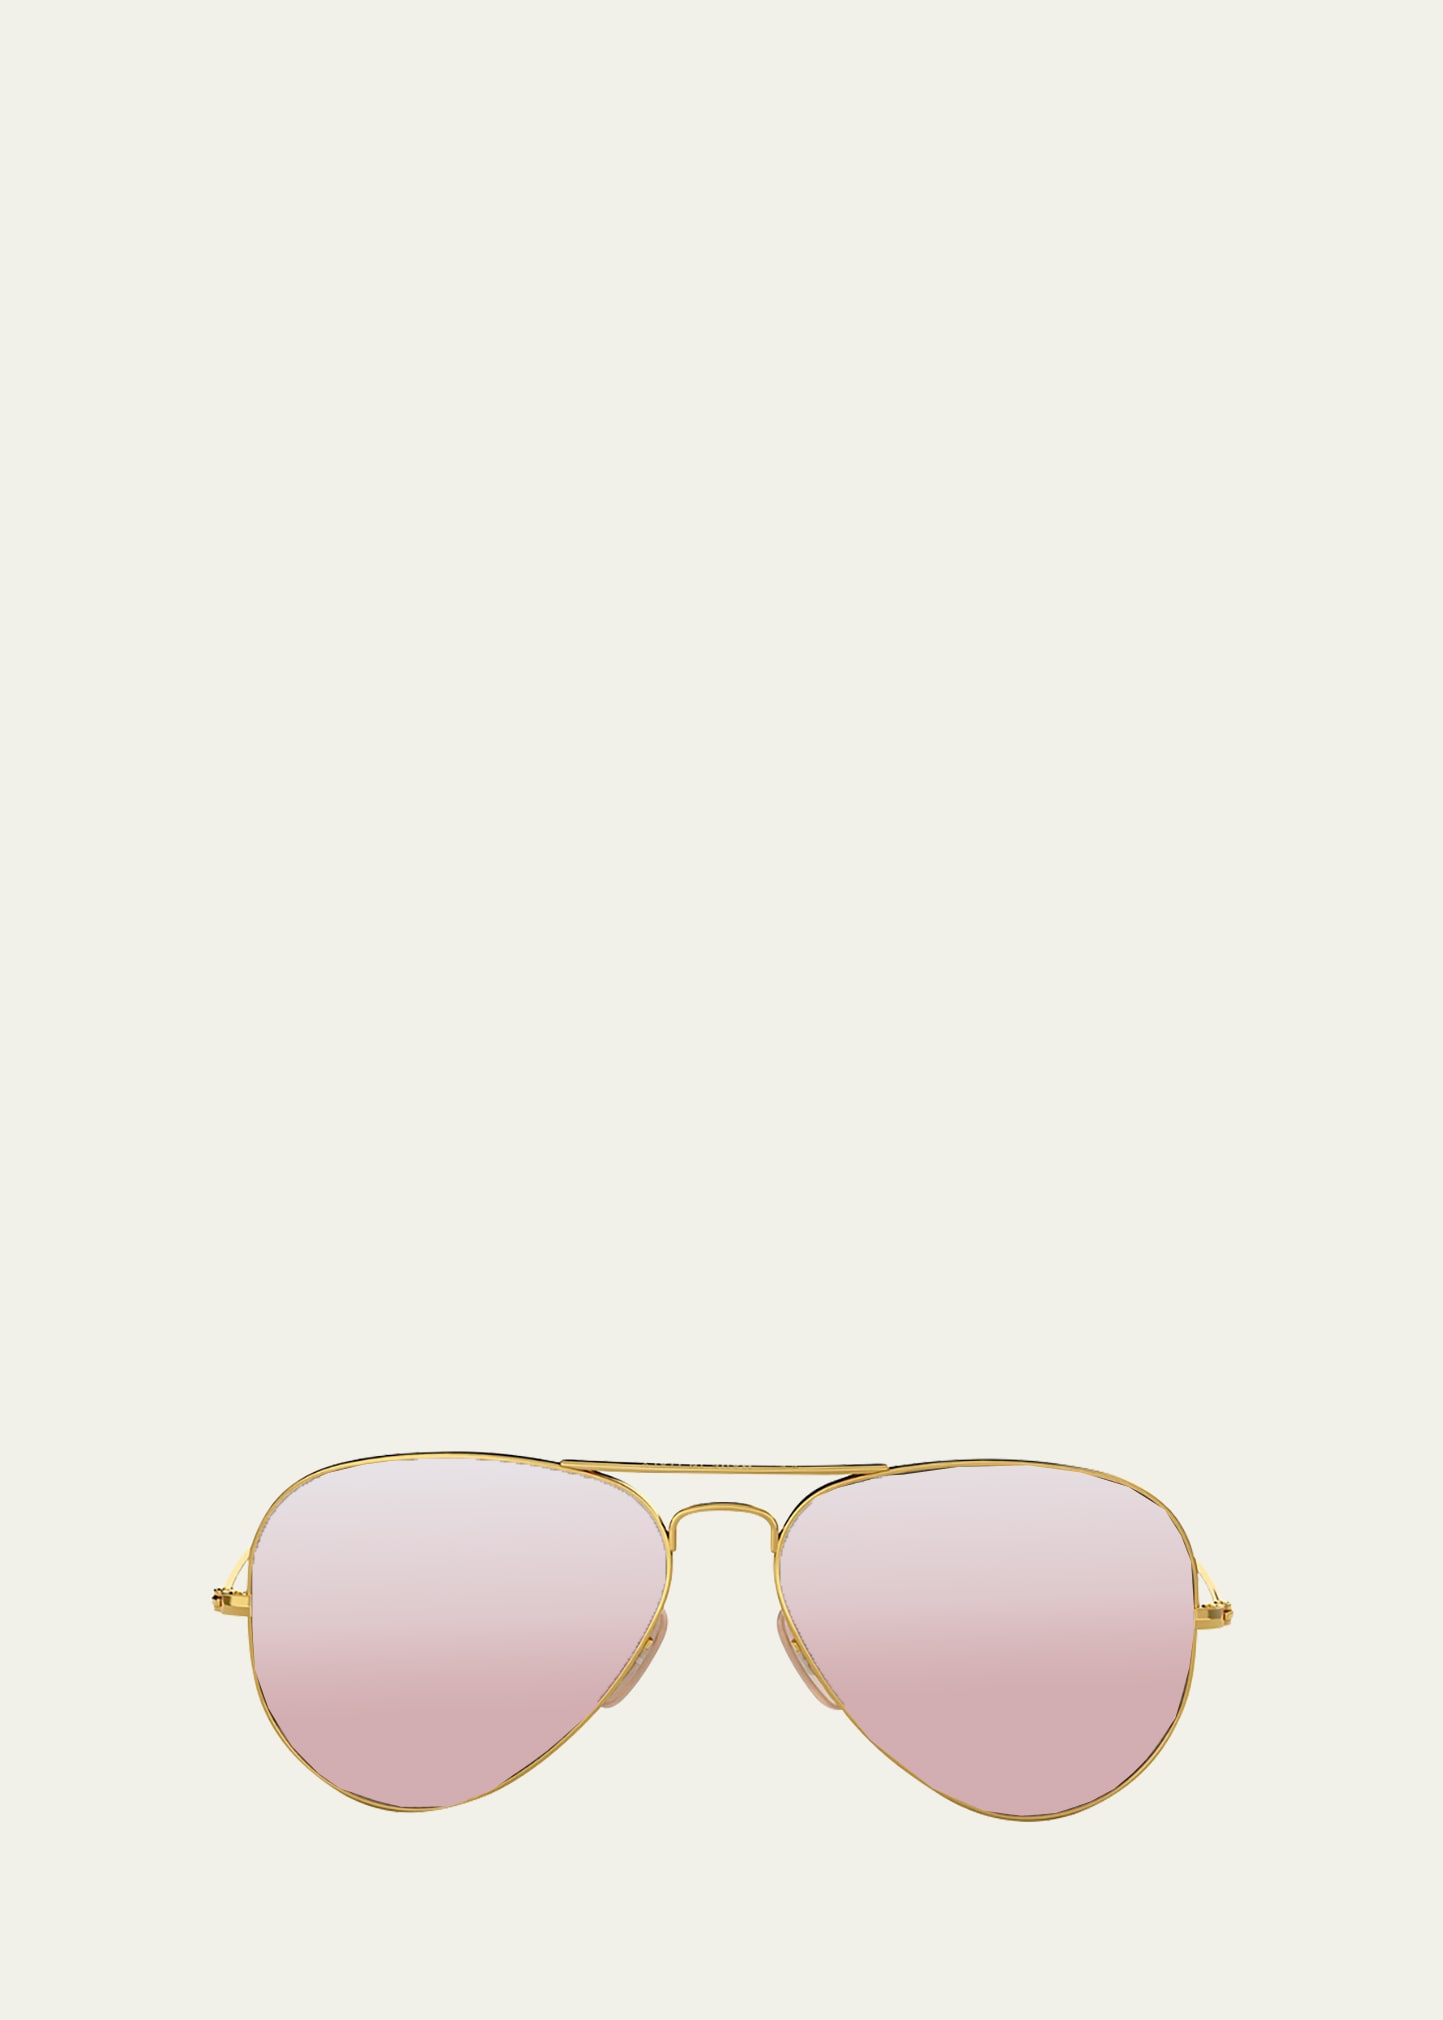 Ray Ban Mirrored Flash Aviator Sunglasses In Gold/pink